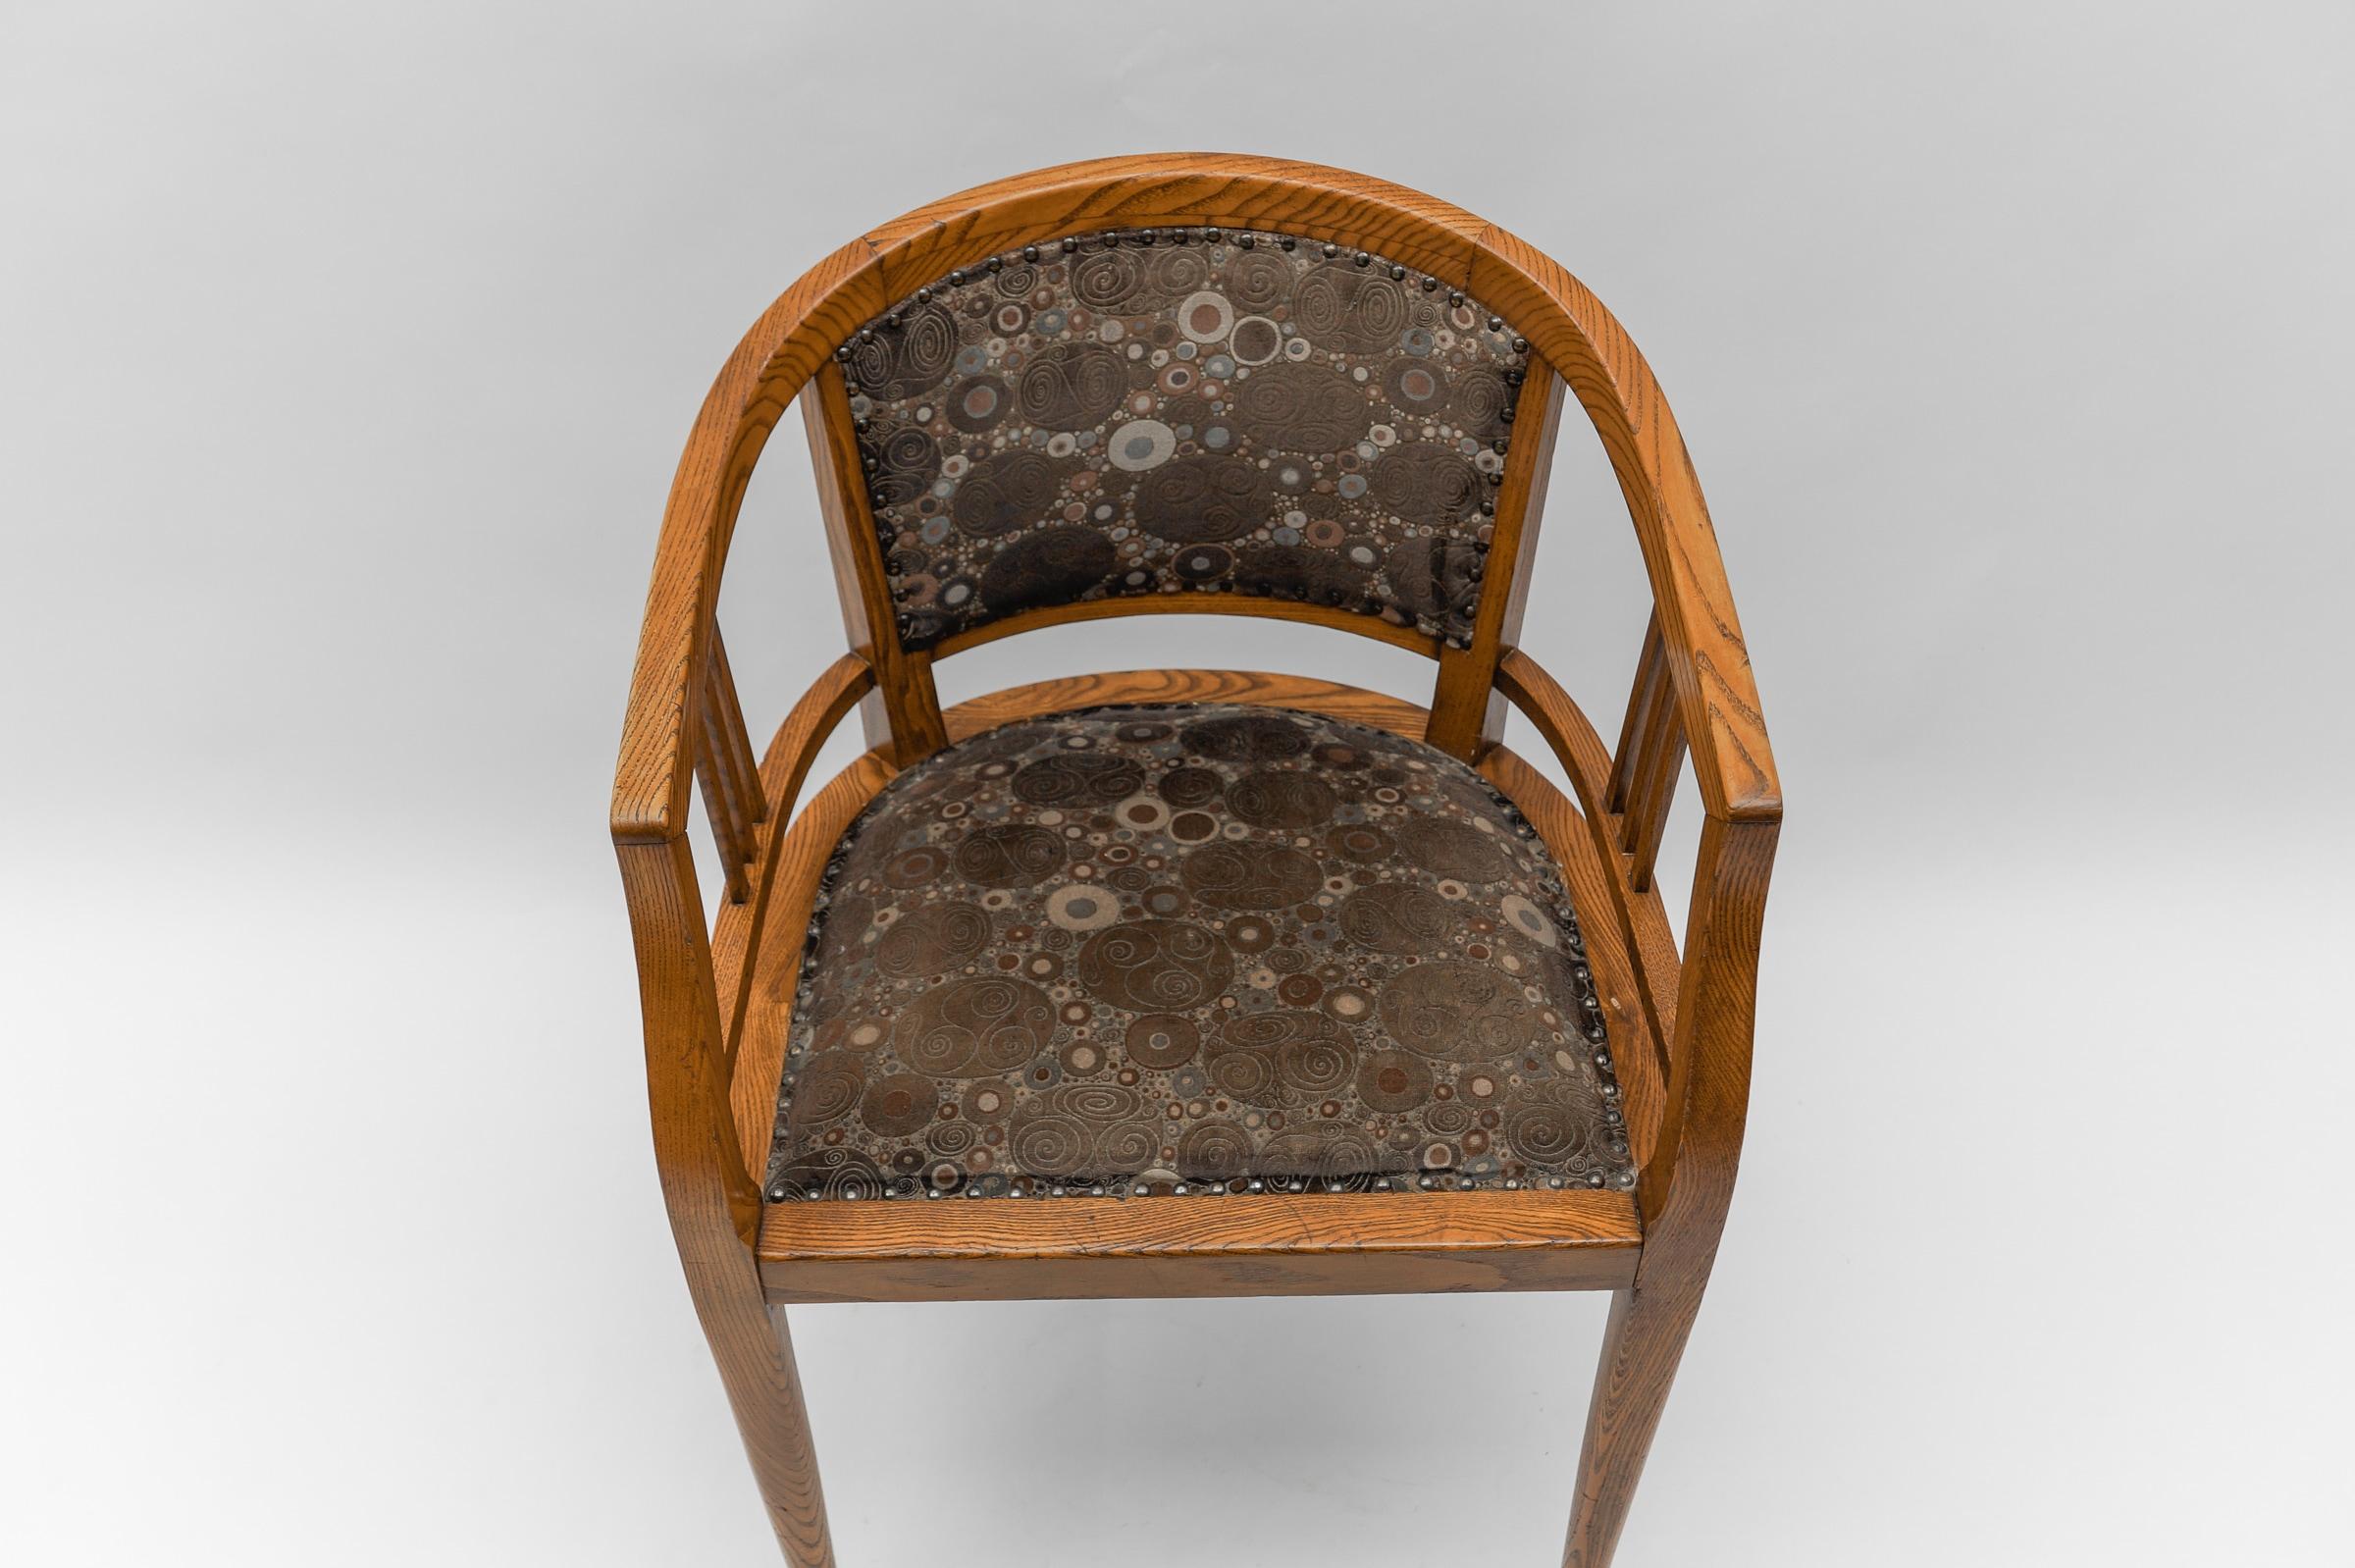 Art Deco Armchair with Gustav Klimt Upholstery Fabric, 1930s Austria For Sale 8